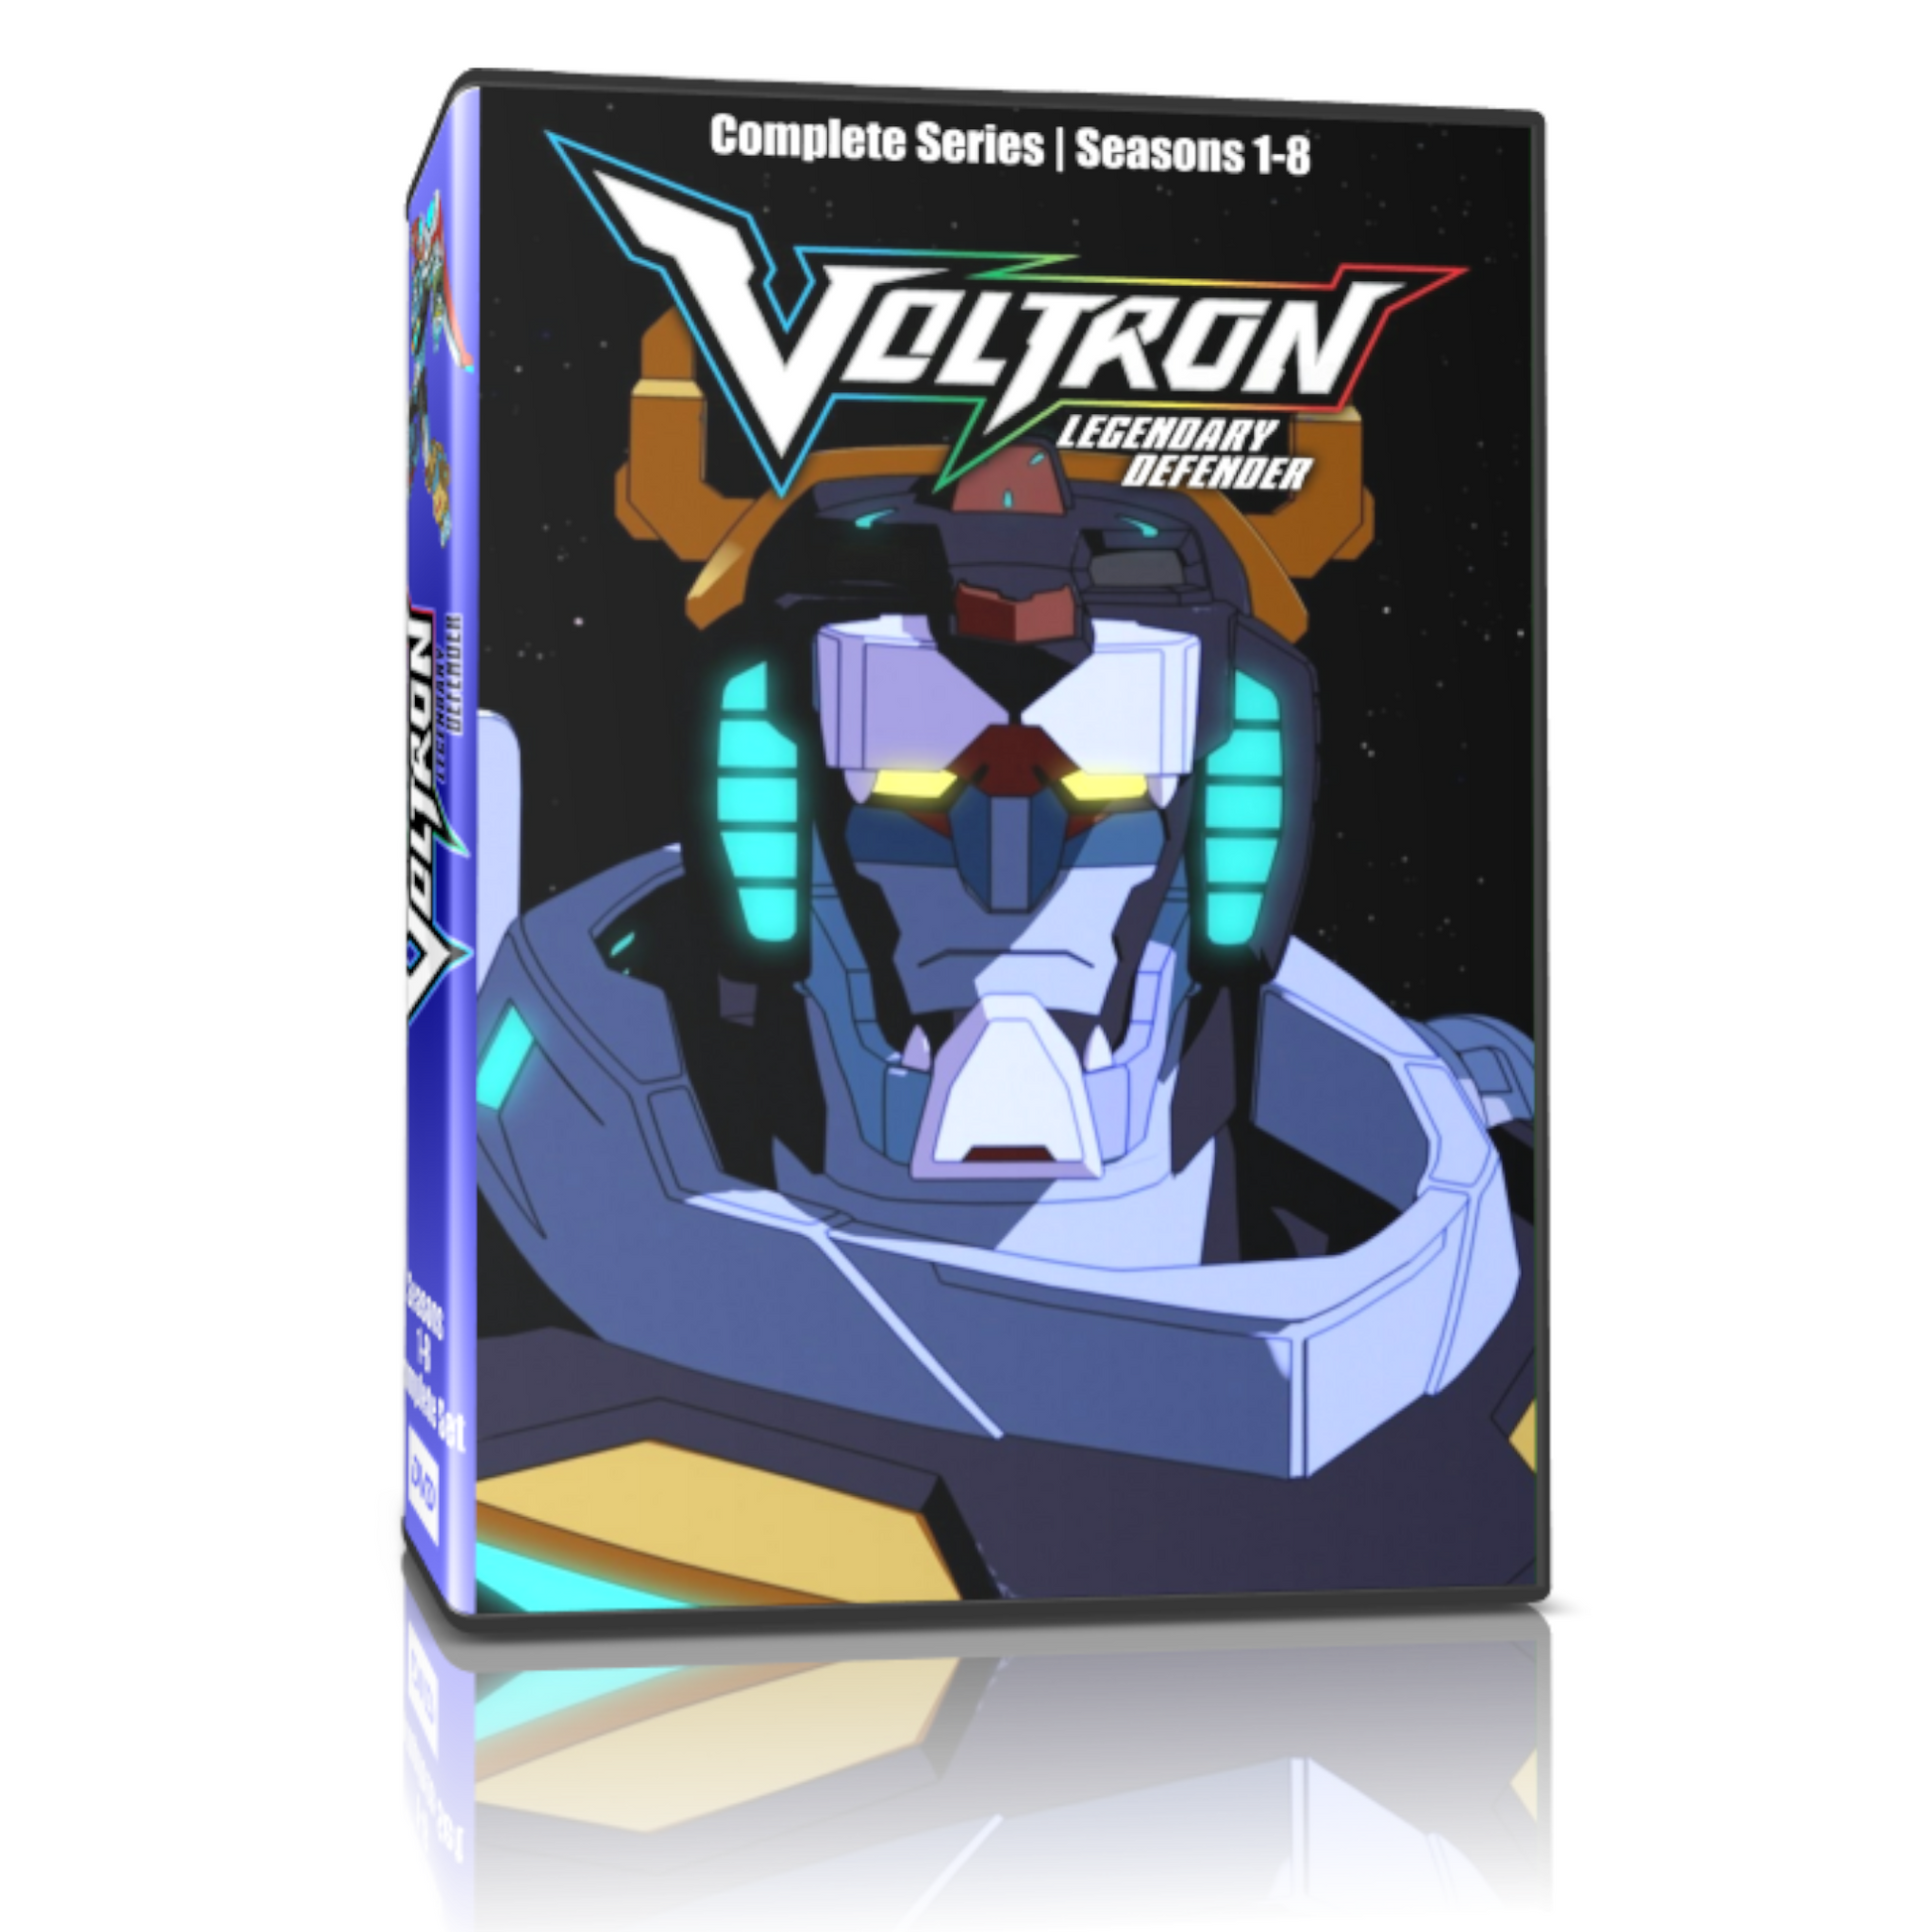 VOLTRON Legendary Defender Seasons 1,2,3,4,5,6,7,8 Complete Series DVD - RetroAnimation 